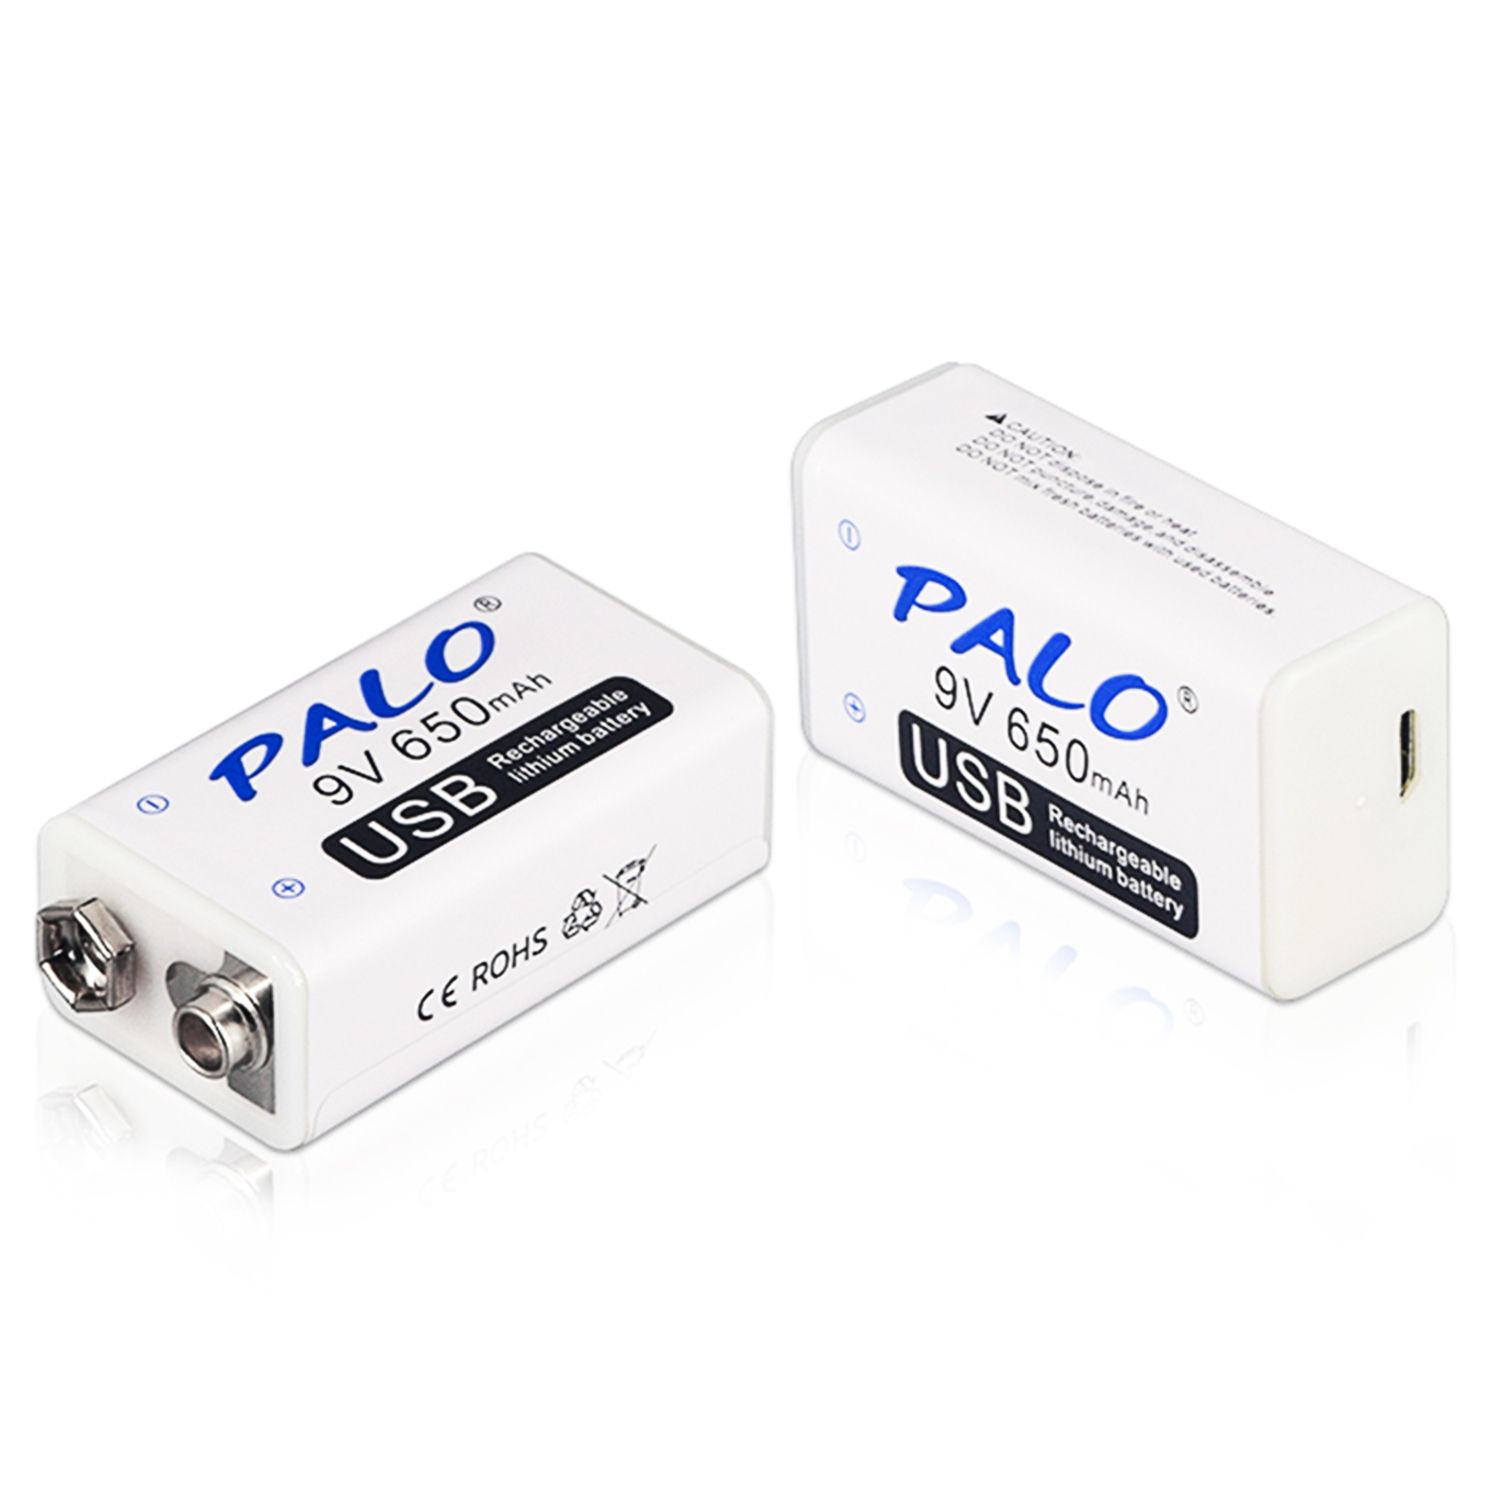 Літієва батарейка (крона) PALO micro USB 9V 650mAh